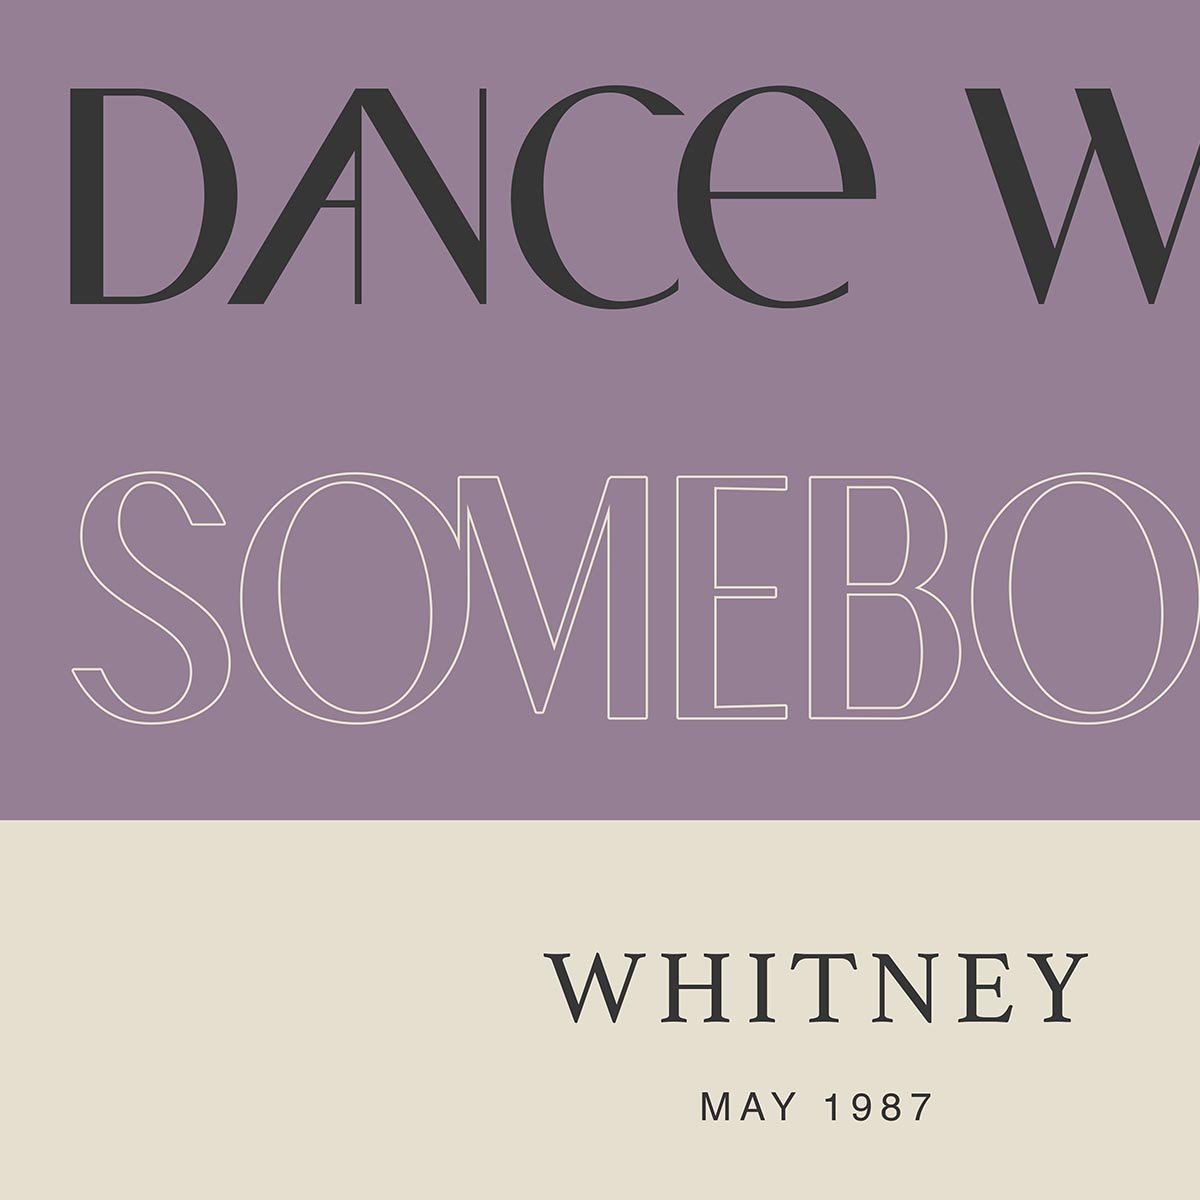 I Wanna Dance with Somebody Whitney Houston